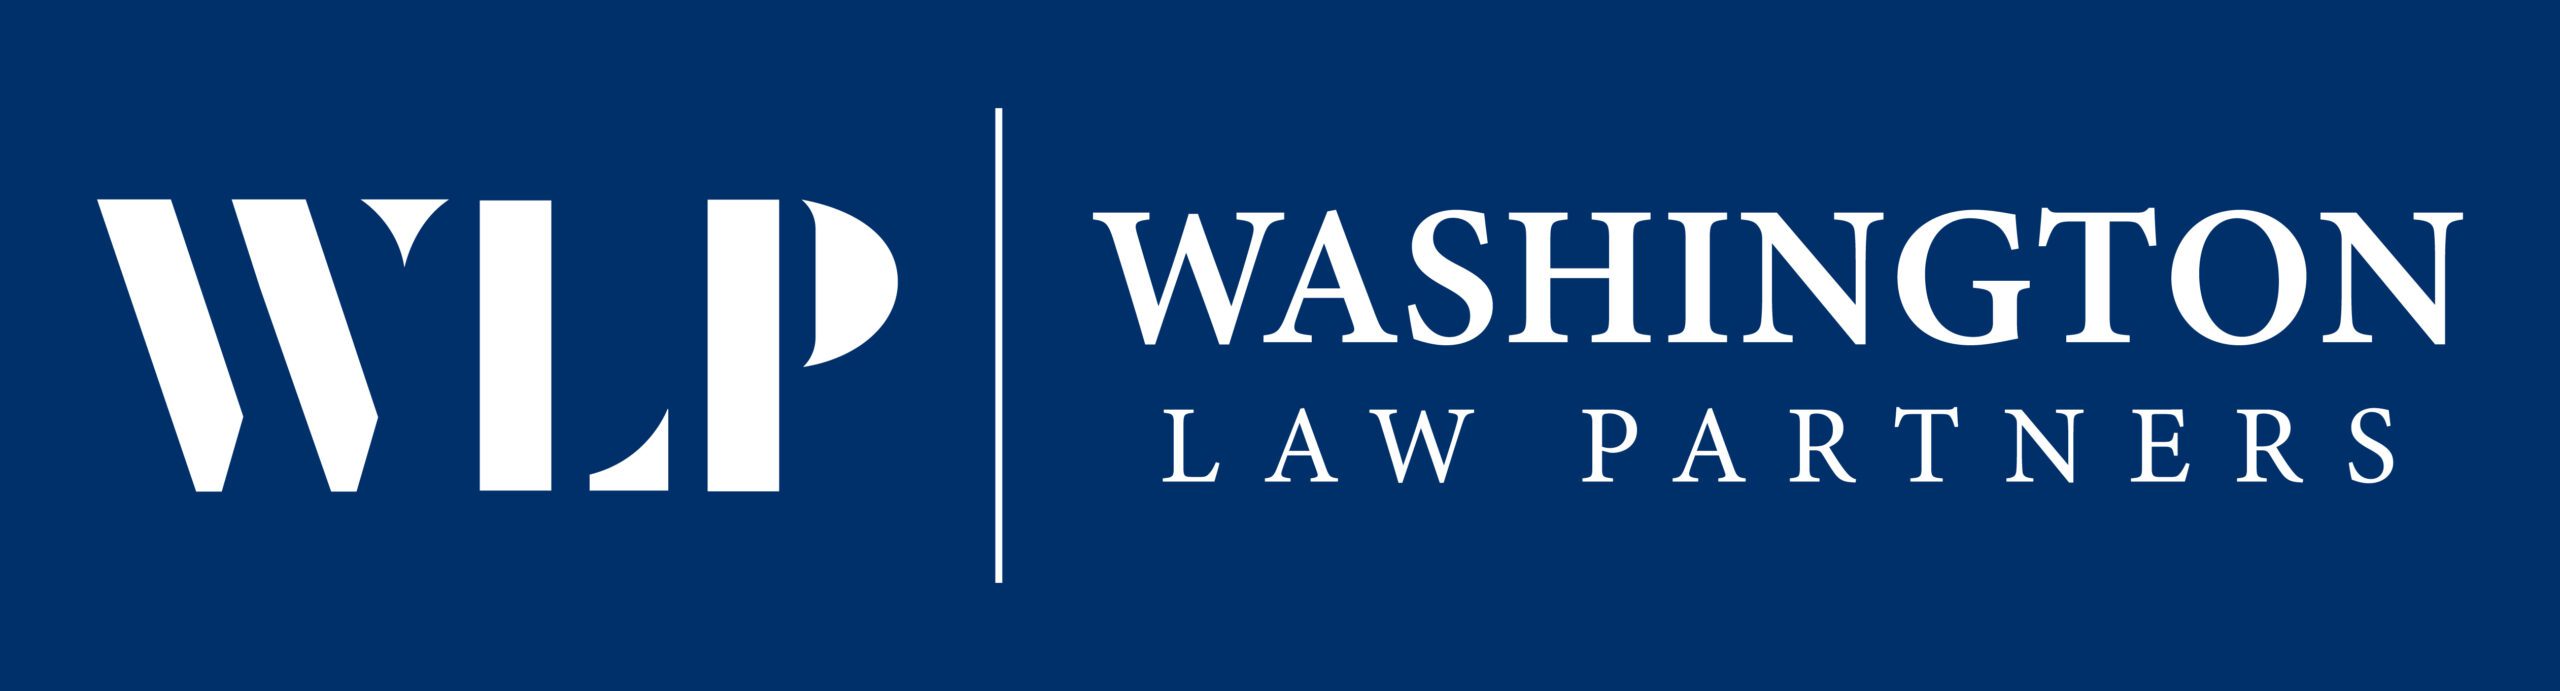 Washington DC Estate Planning Lawyer